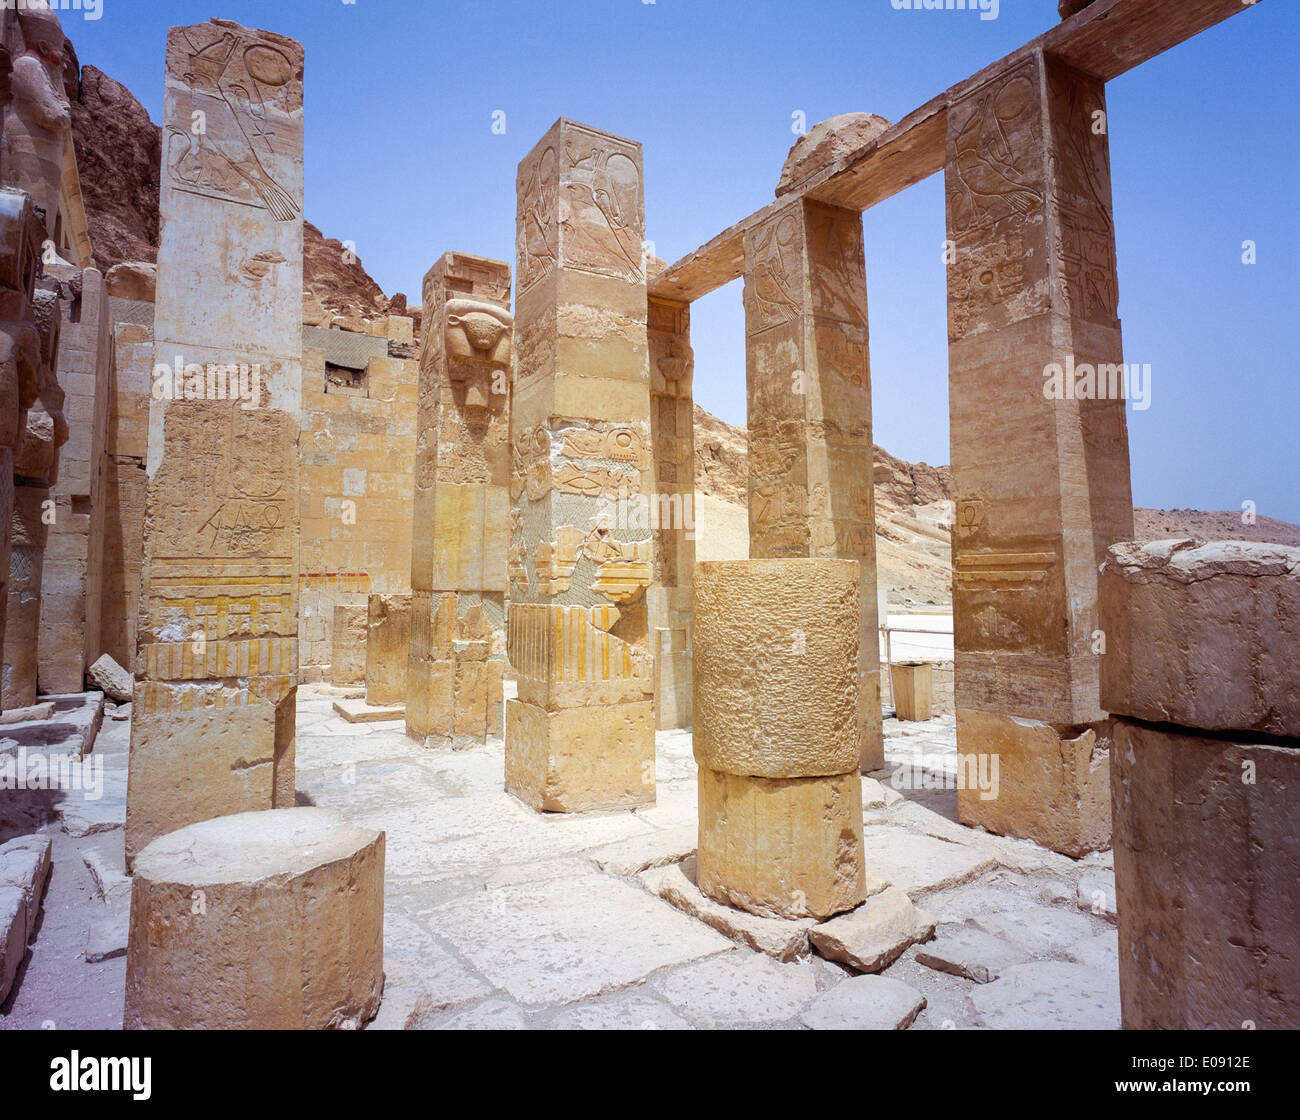 Mortuary temple of Hatshepsut or Deir el Bahri the Theban necropolis near Luxor Egypt Stock Photo